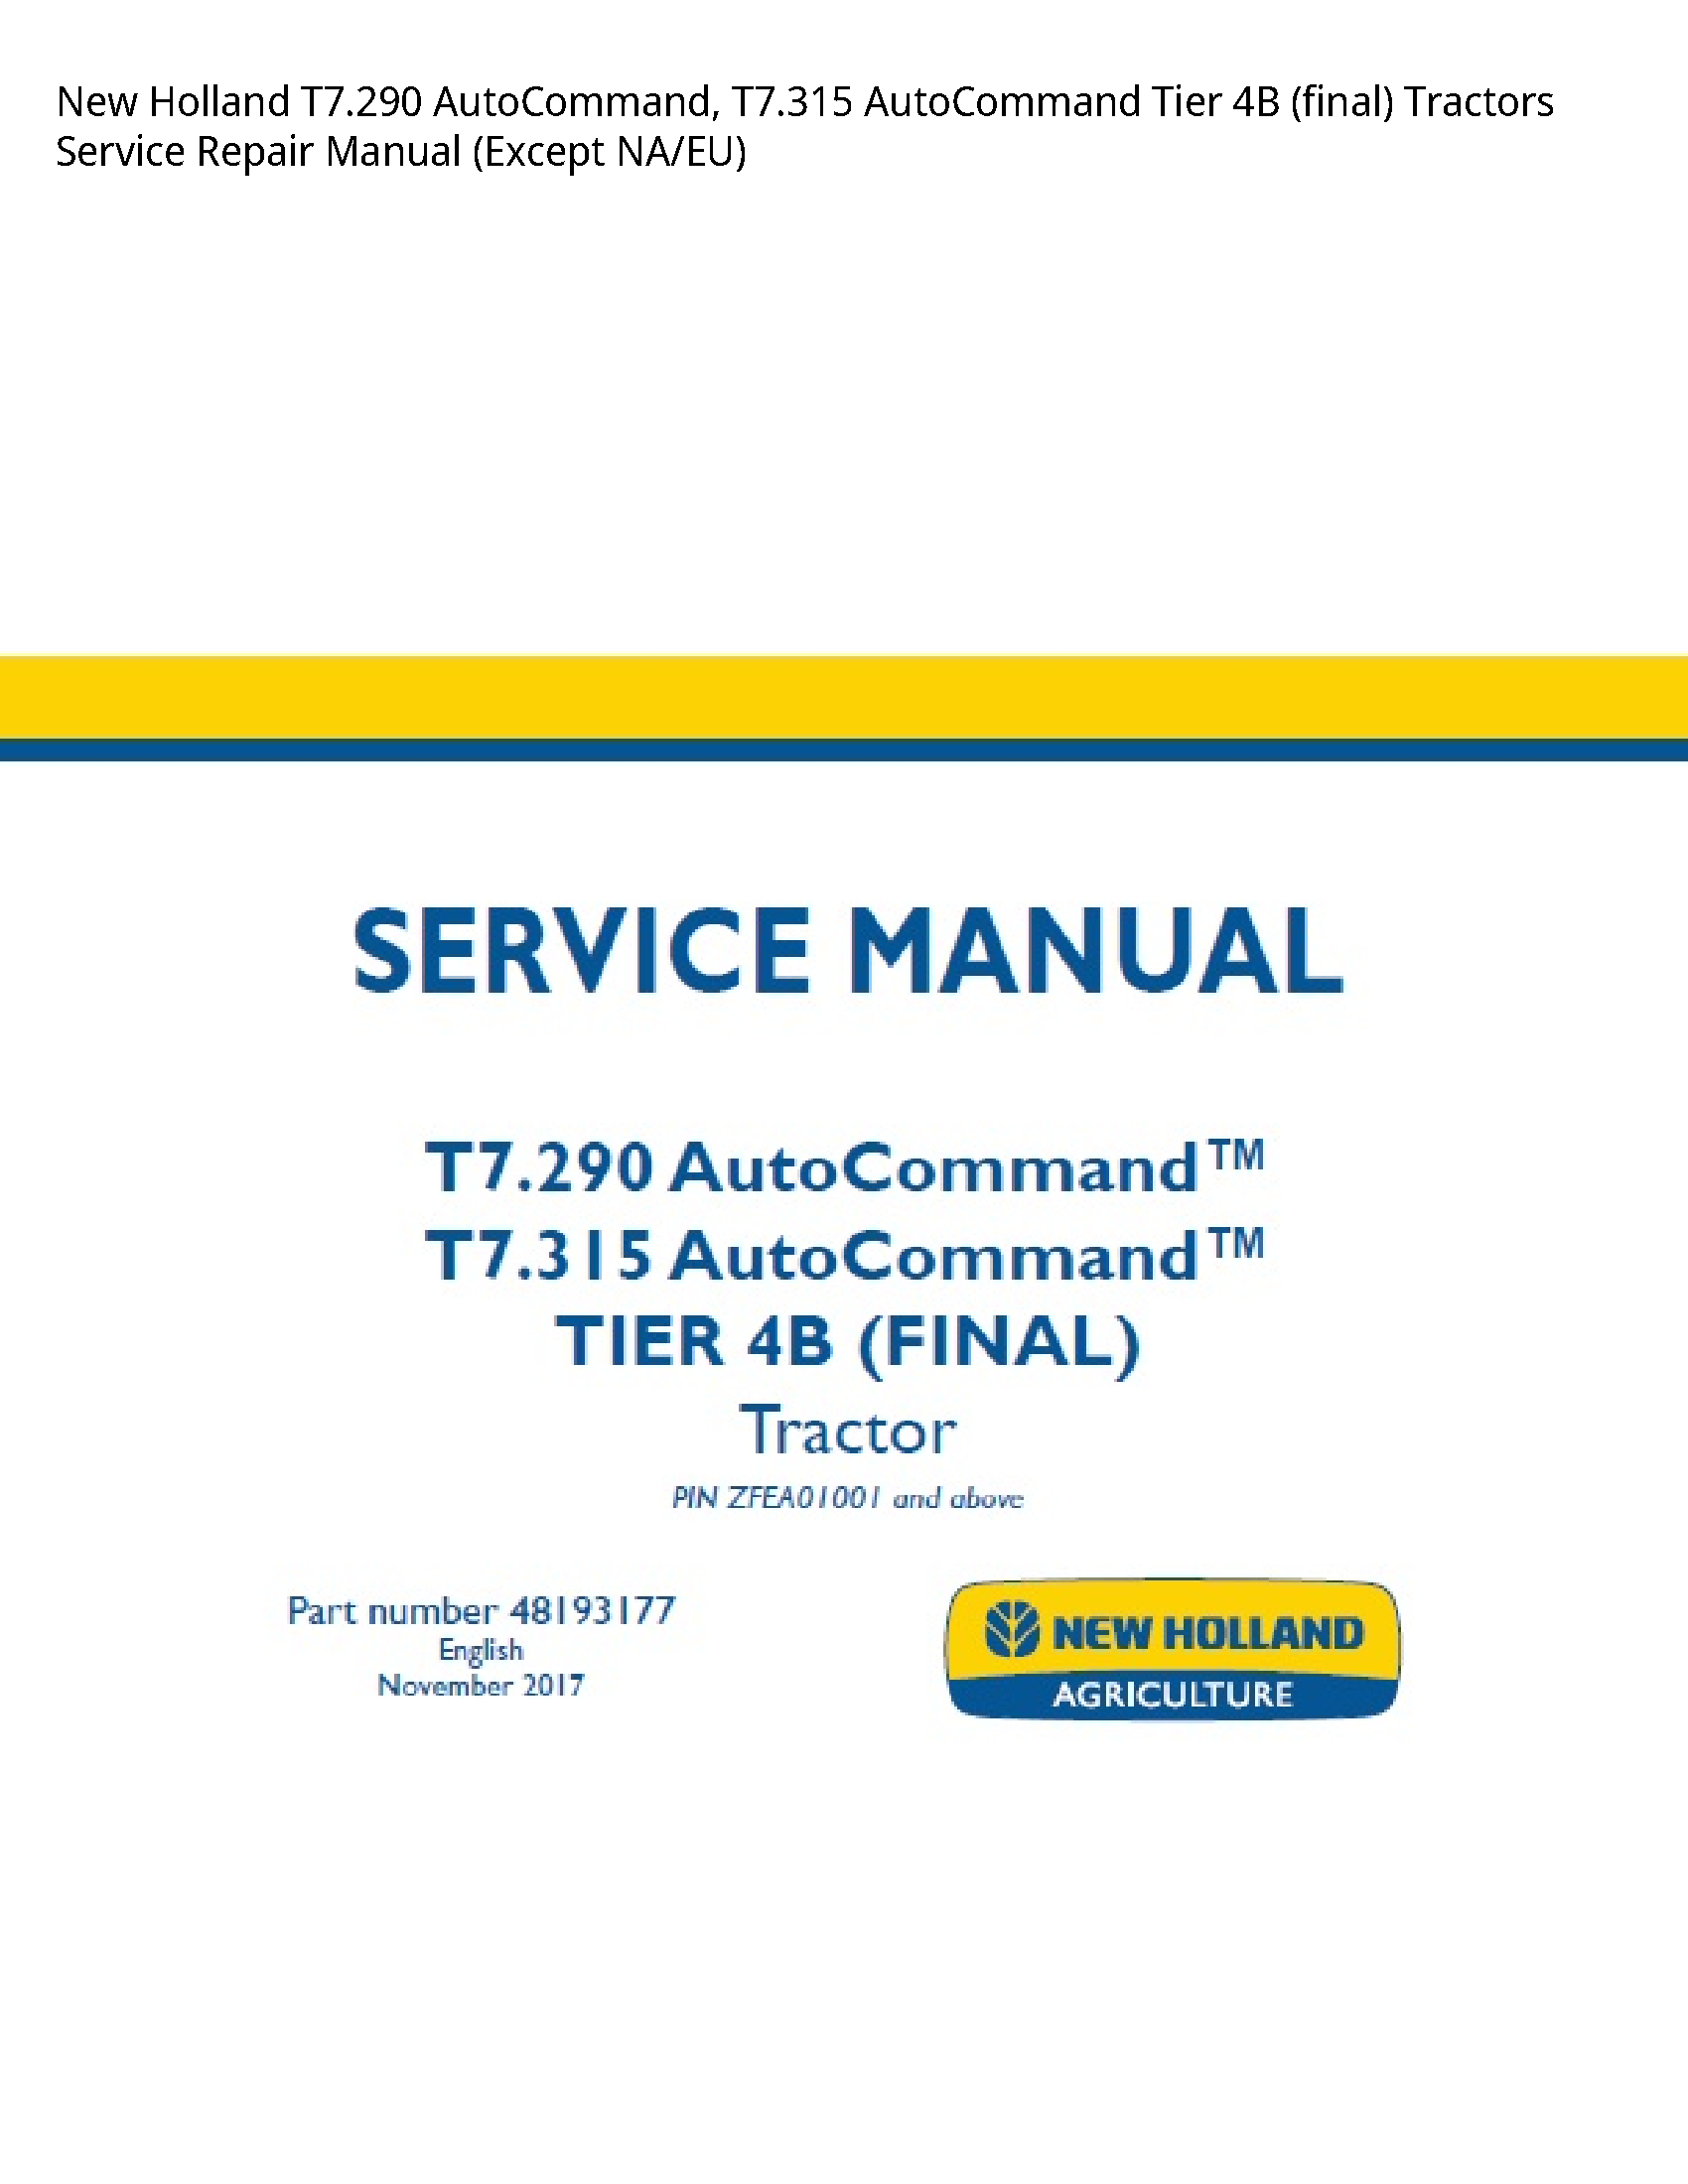 New Holland T7.290 AutoCommand manual